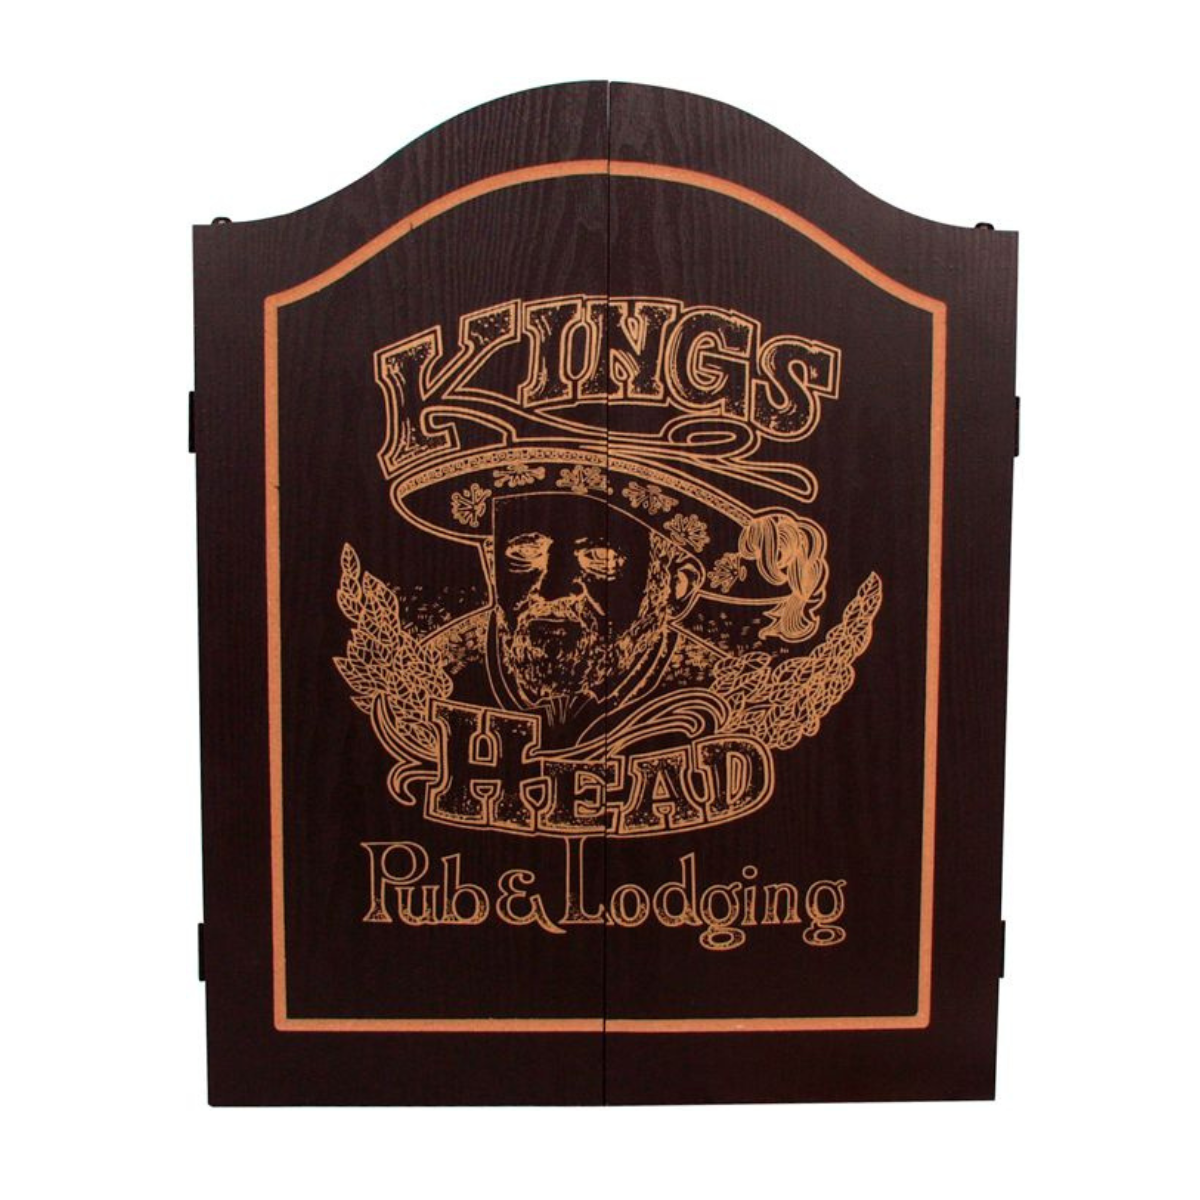 The Kings Head Dartboard Cabinet Black & Coloured